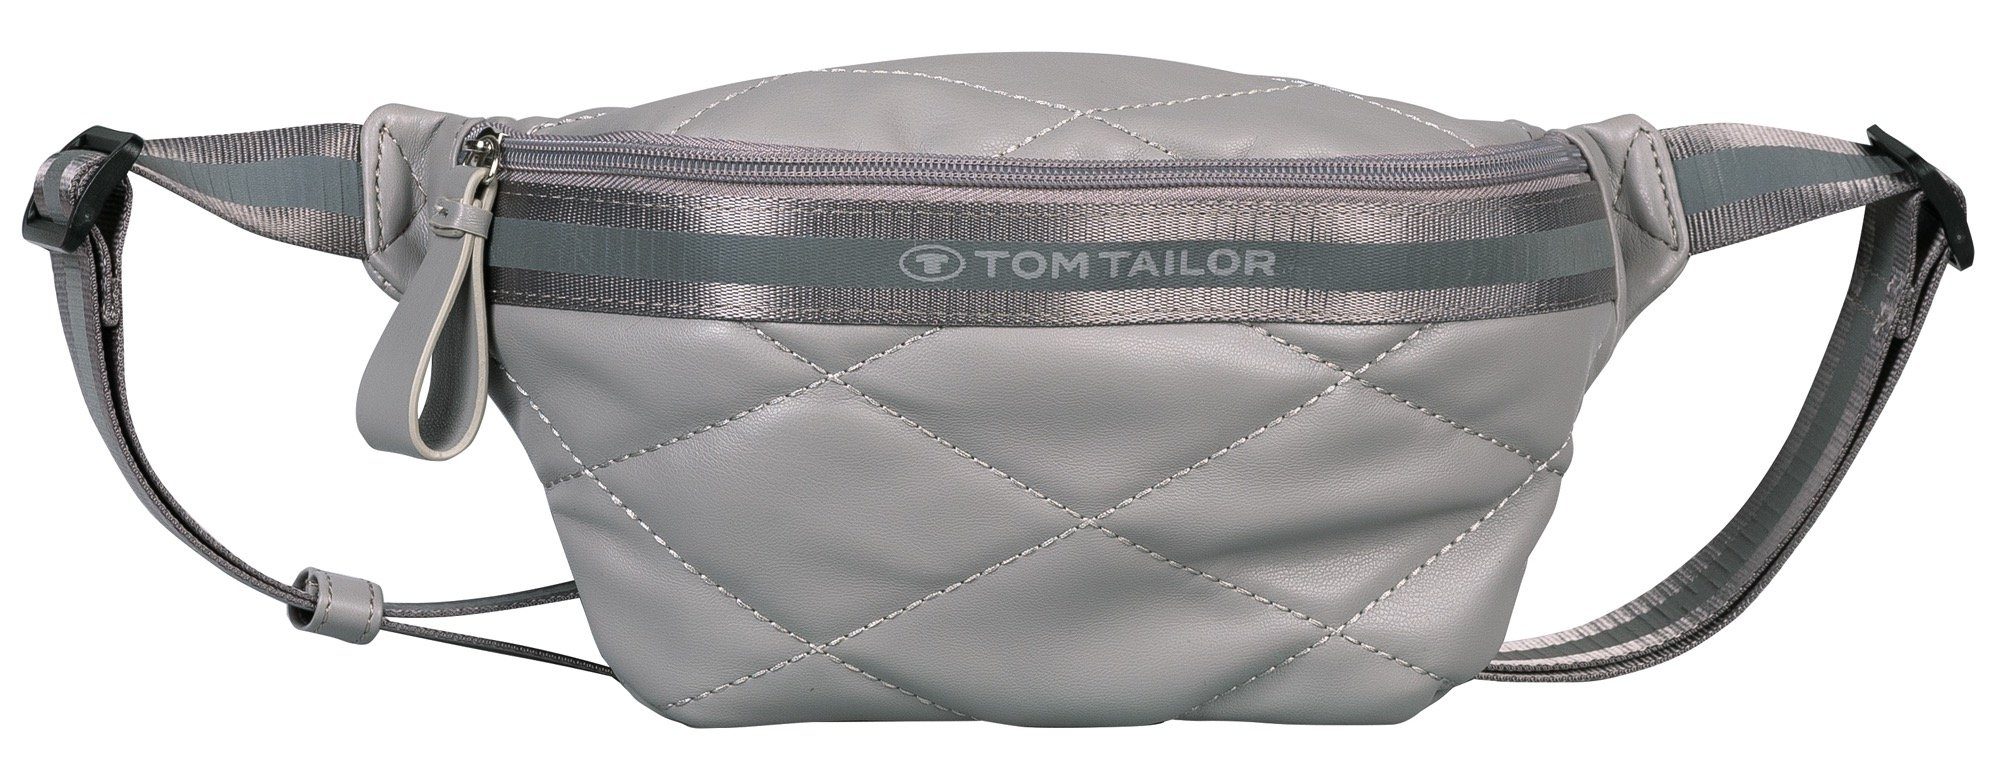 TOM TAILOR Bauchtasche Mica Belt bag, mit modischer Steppung